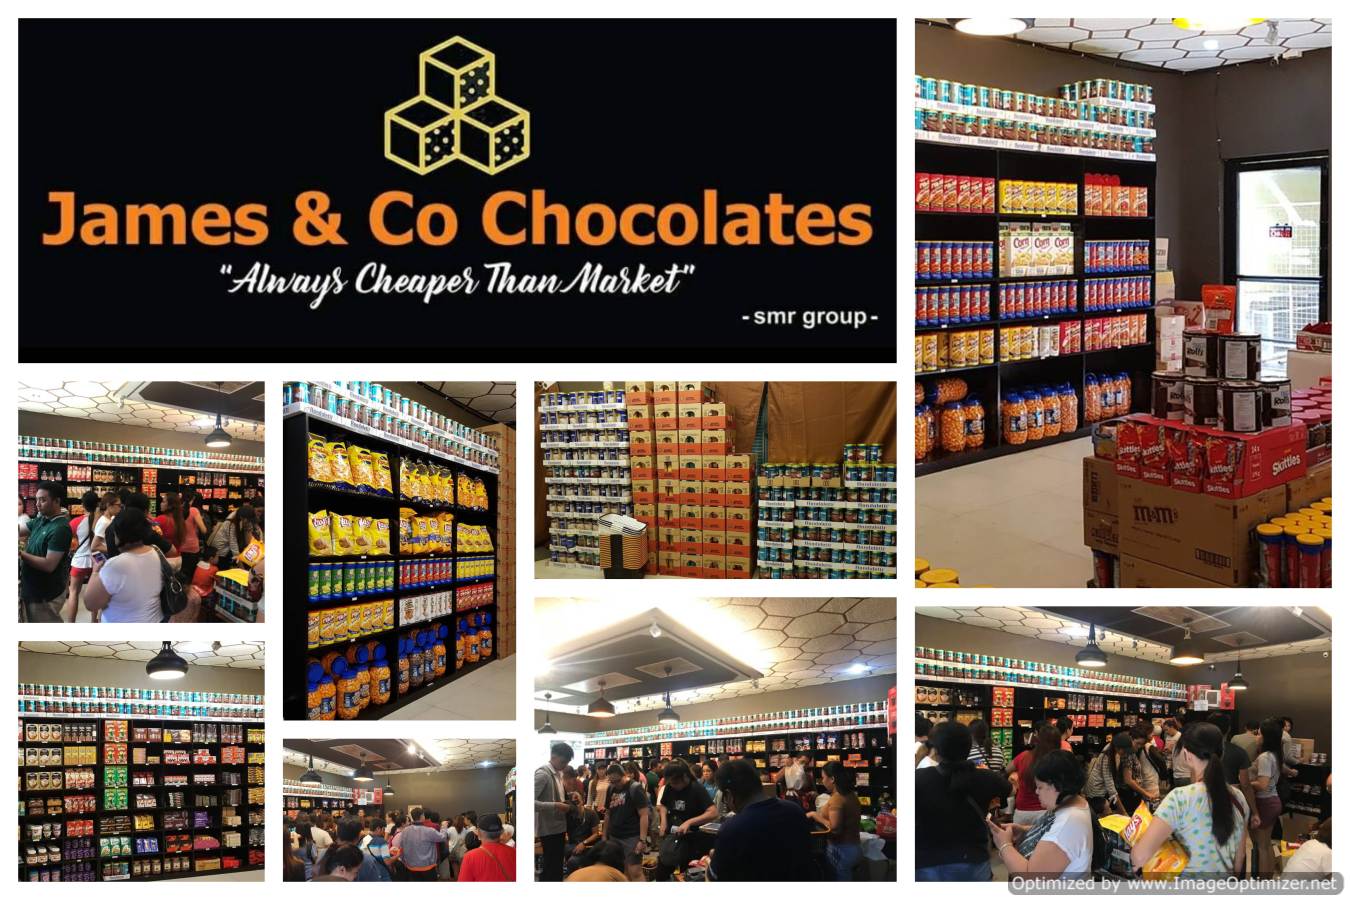 Imported Chocolates